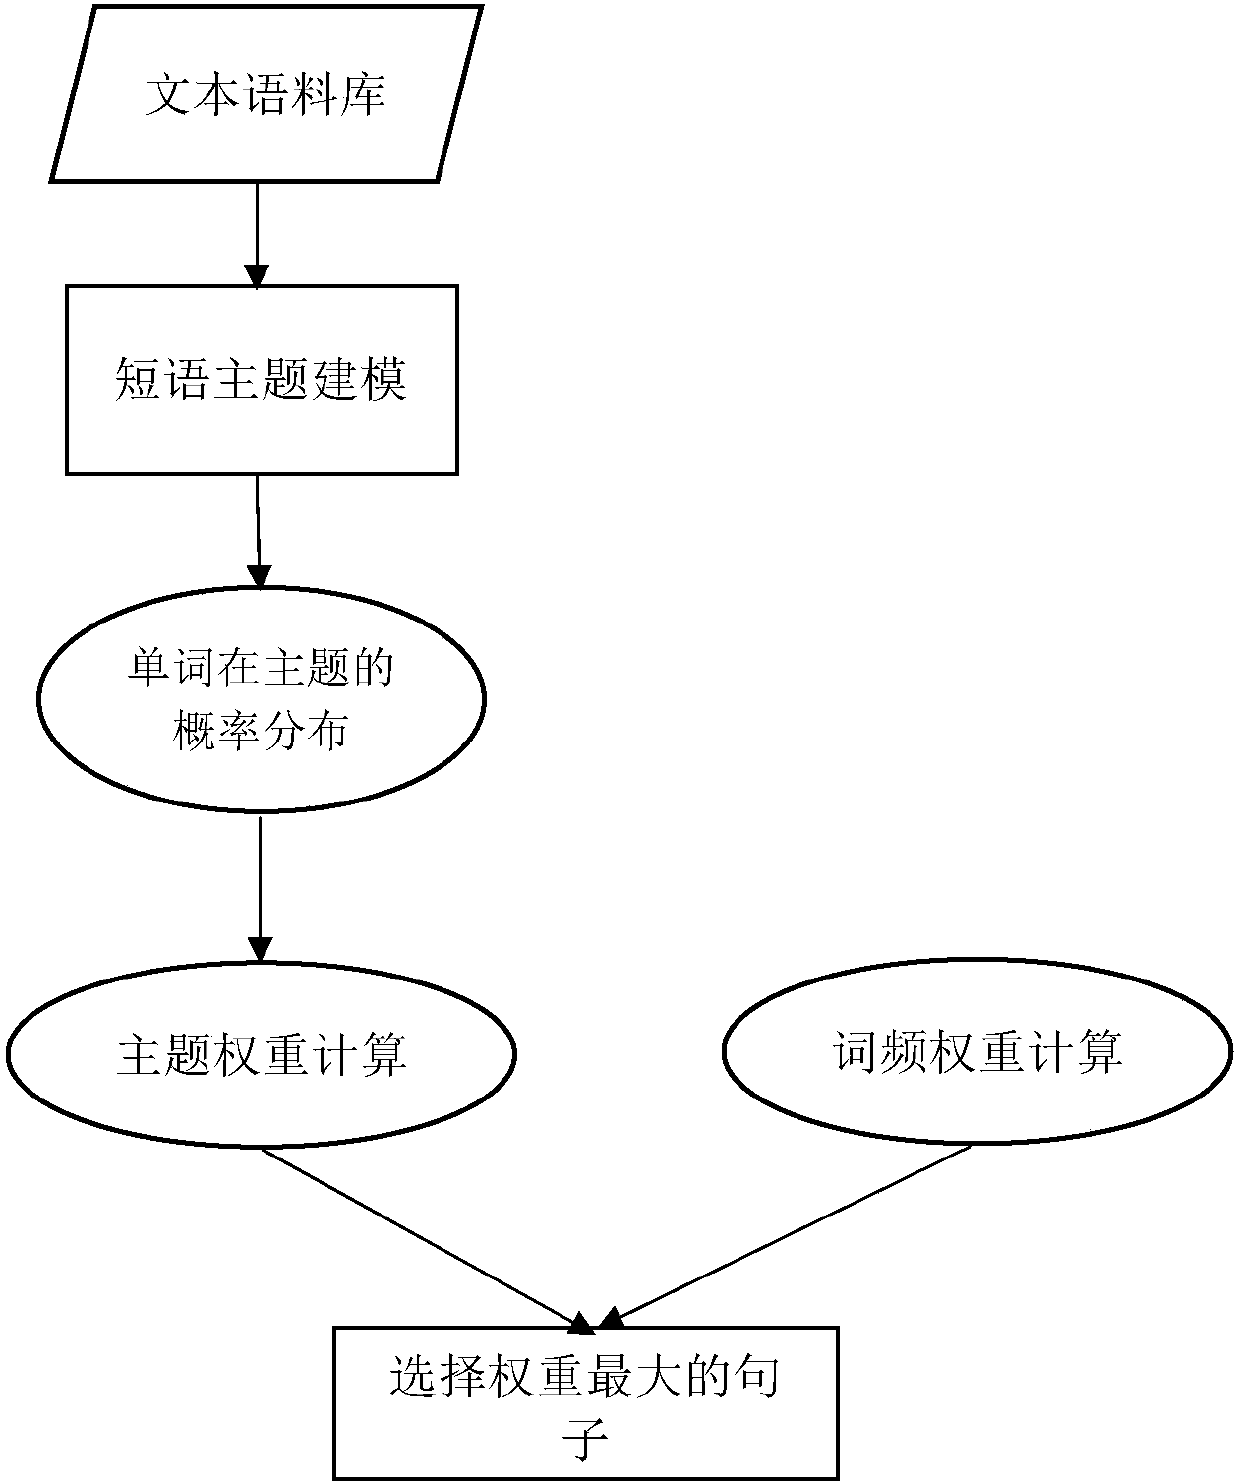 A Multi-Document Automatic Summarization Method Based on Phrase Topic Modeling